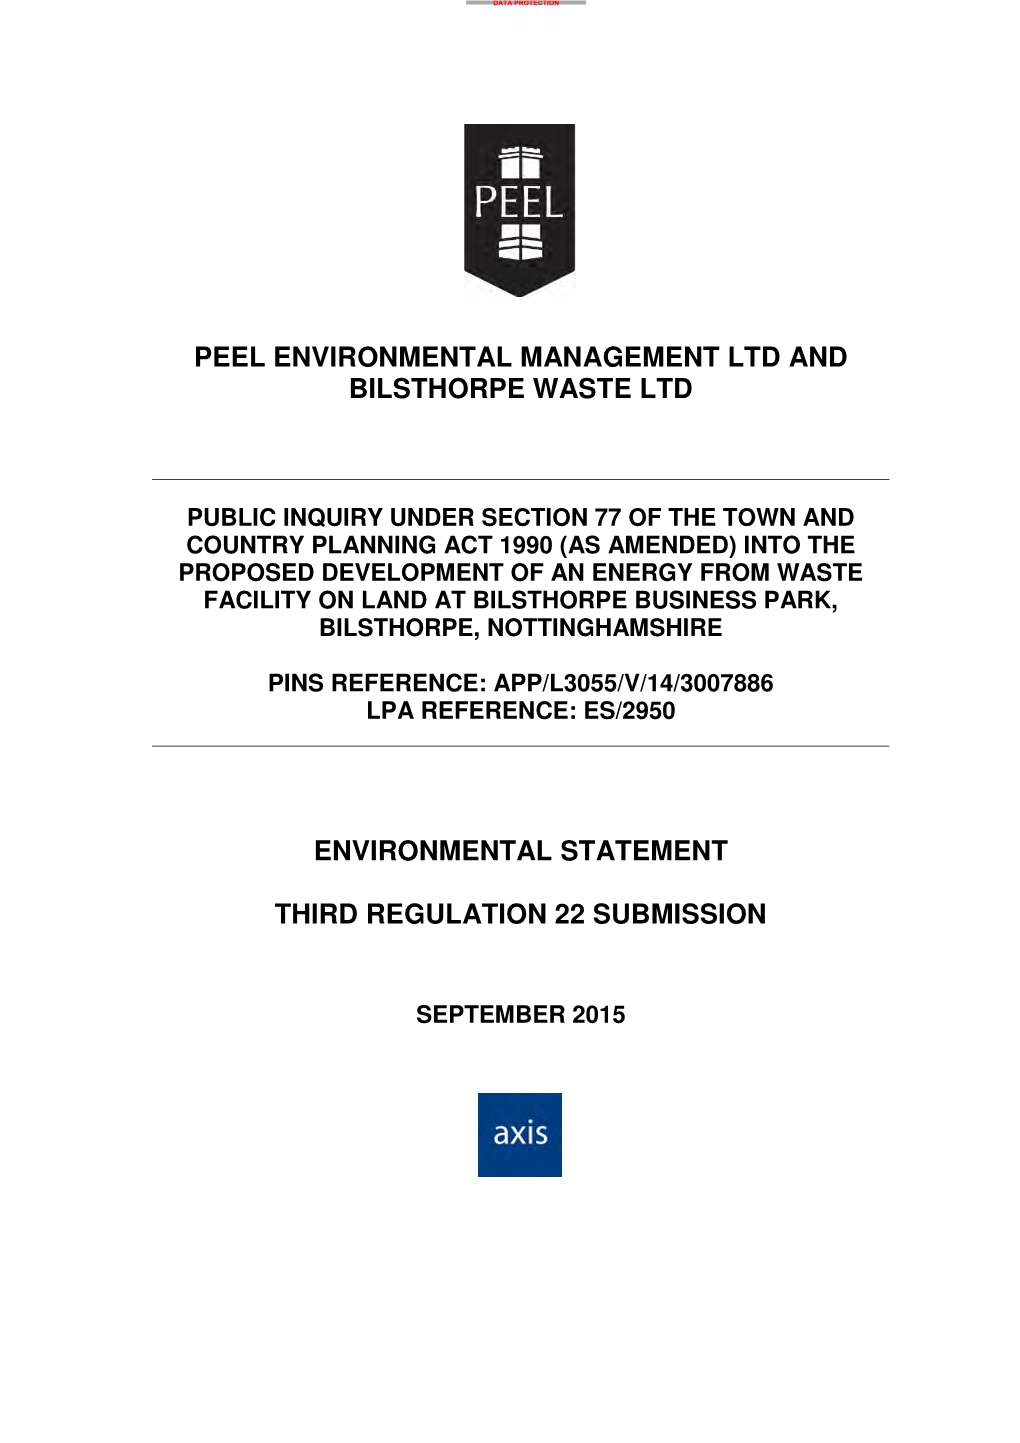 Peel Environmental Management Ltd and Bilsthorpe Waste Ltd